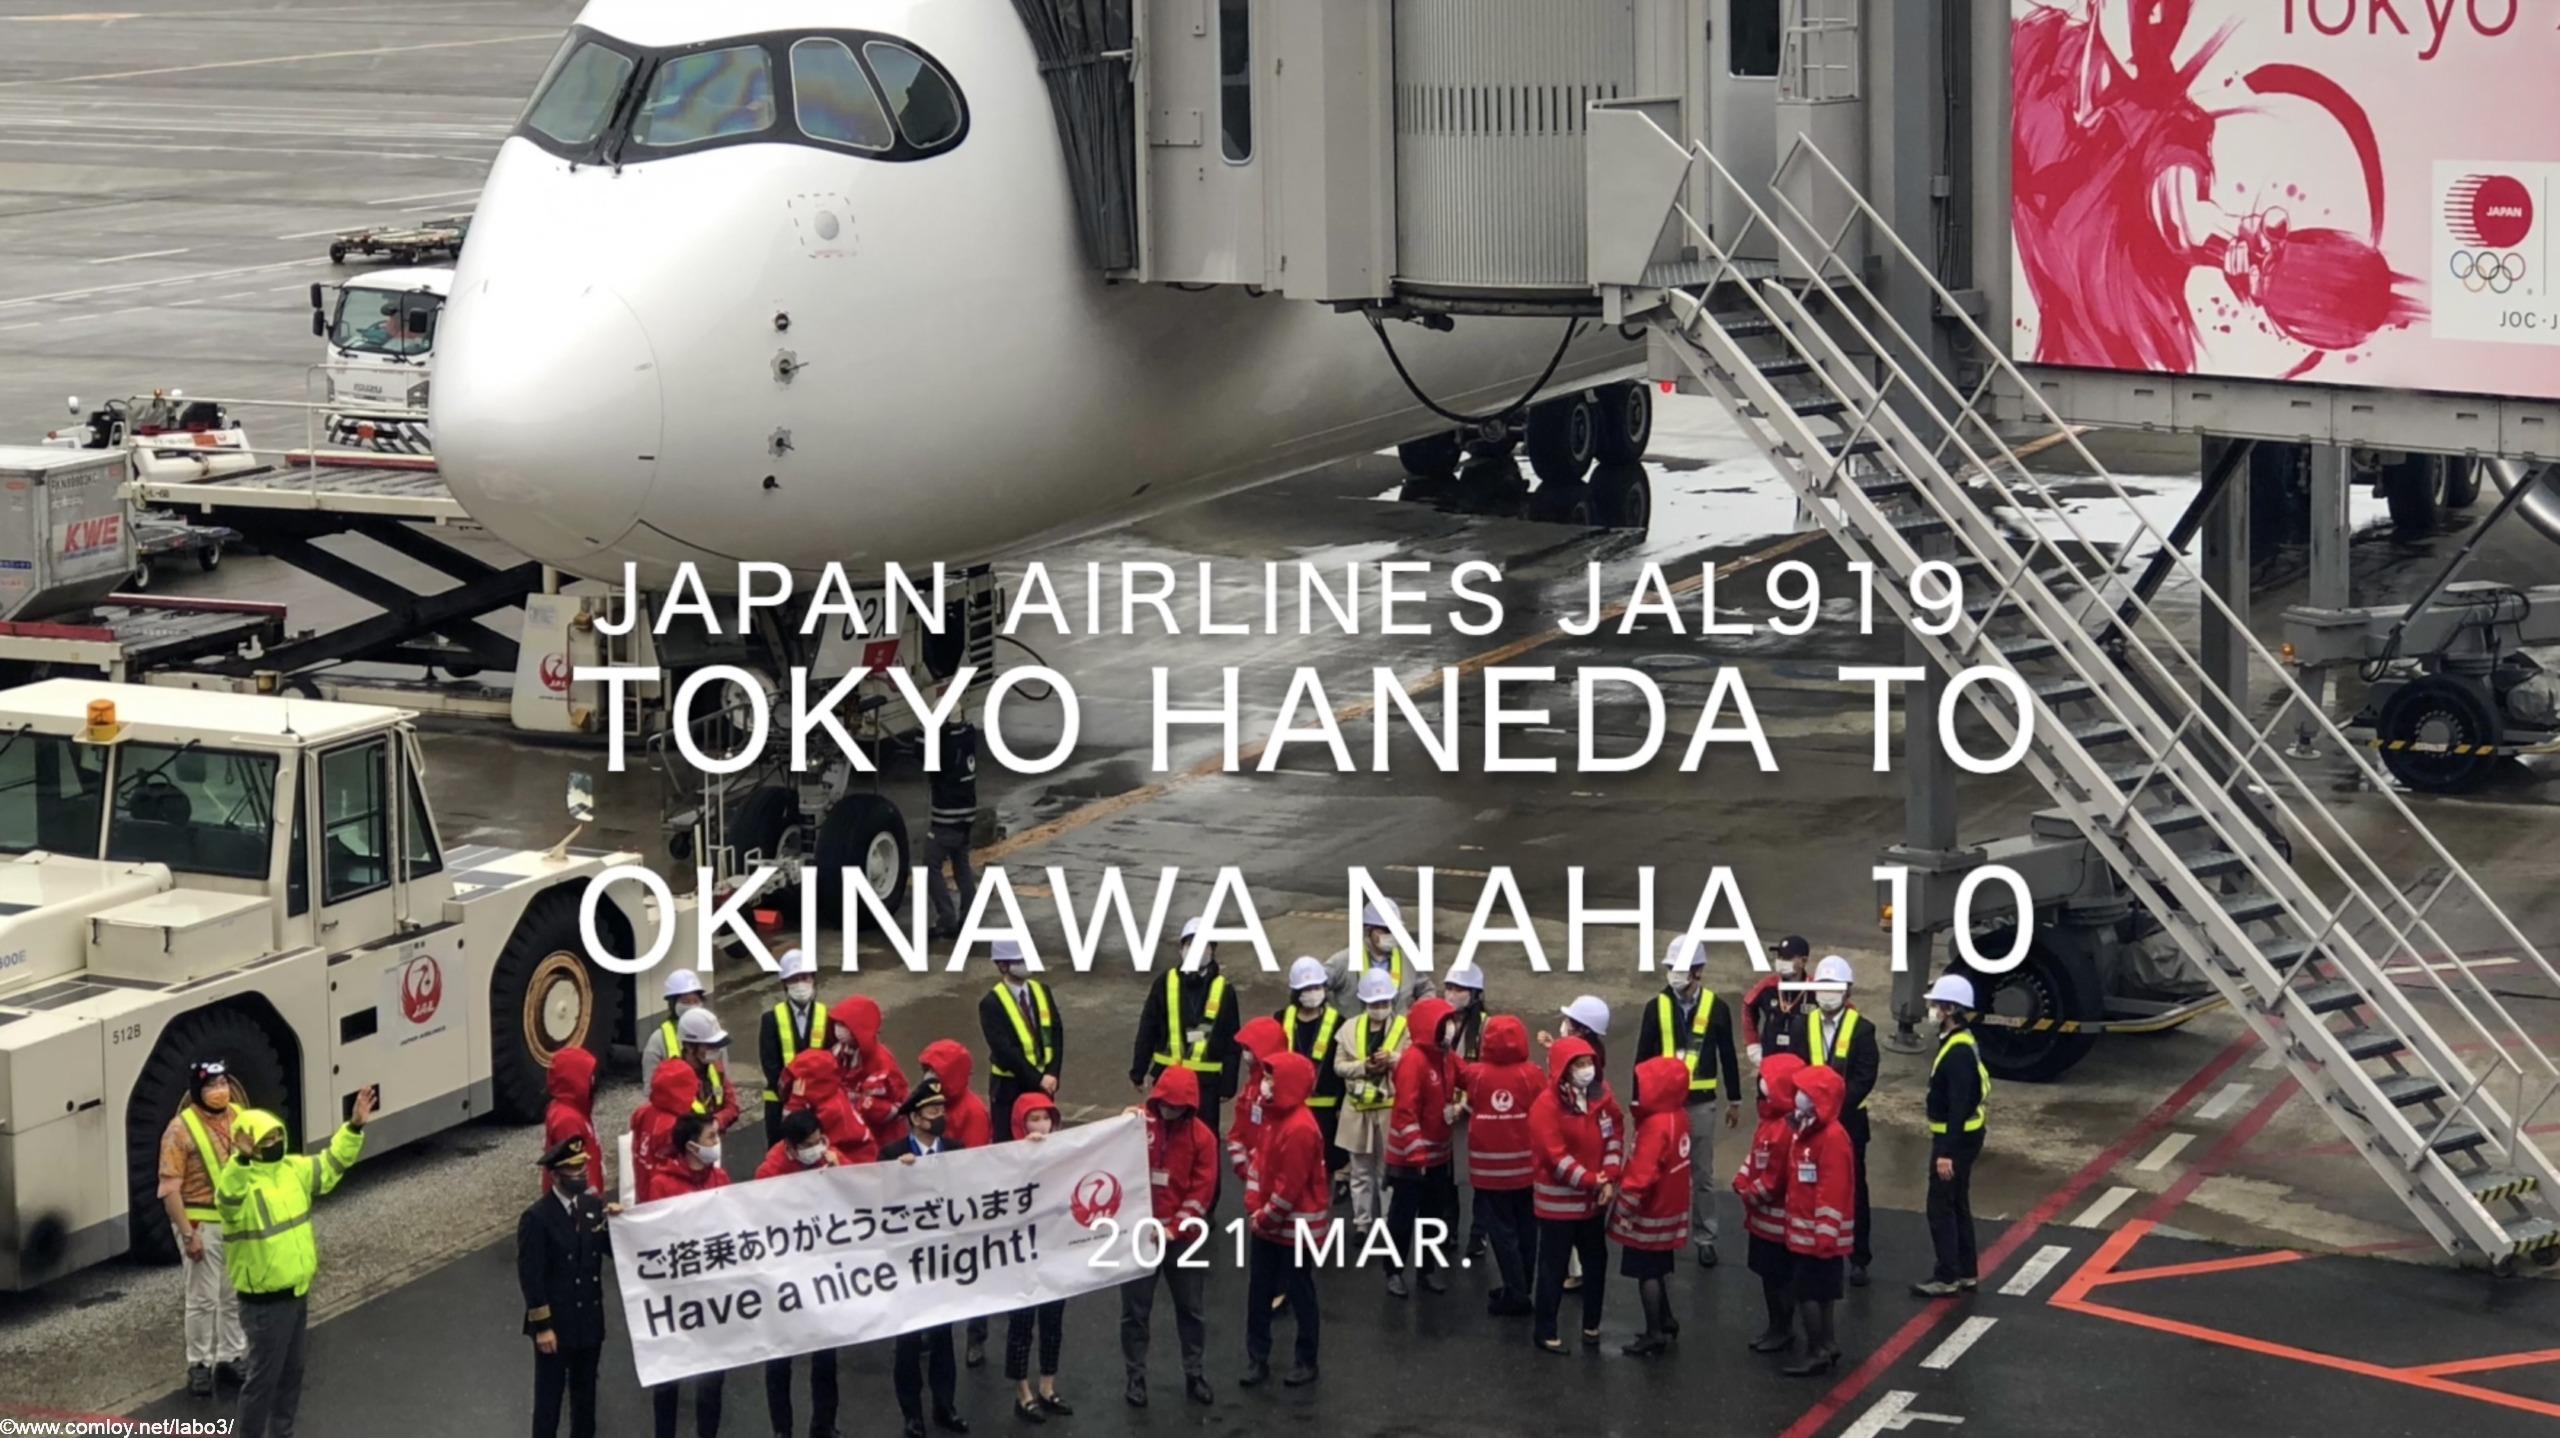 【Flight Report】2021 Mar Japan Airlines JAL919 TOKYO HANEDA TO OKINAWA NAHA_10 日本航空 羽田 - 那覇 搭乗記